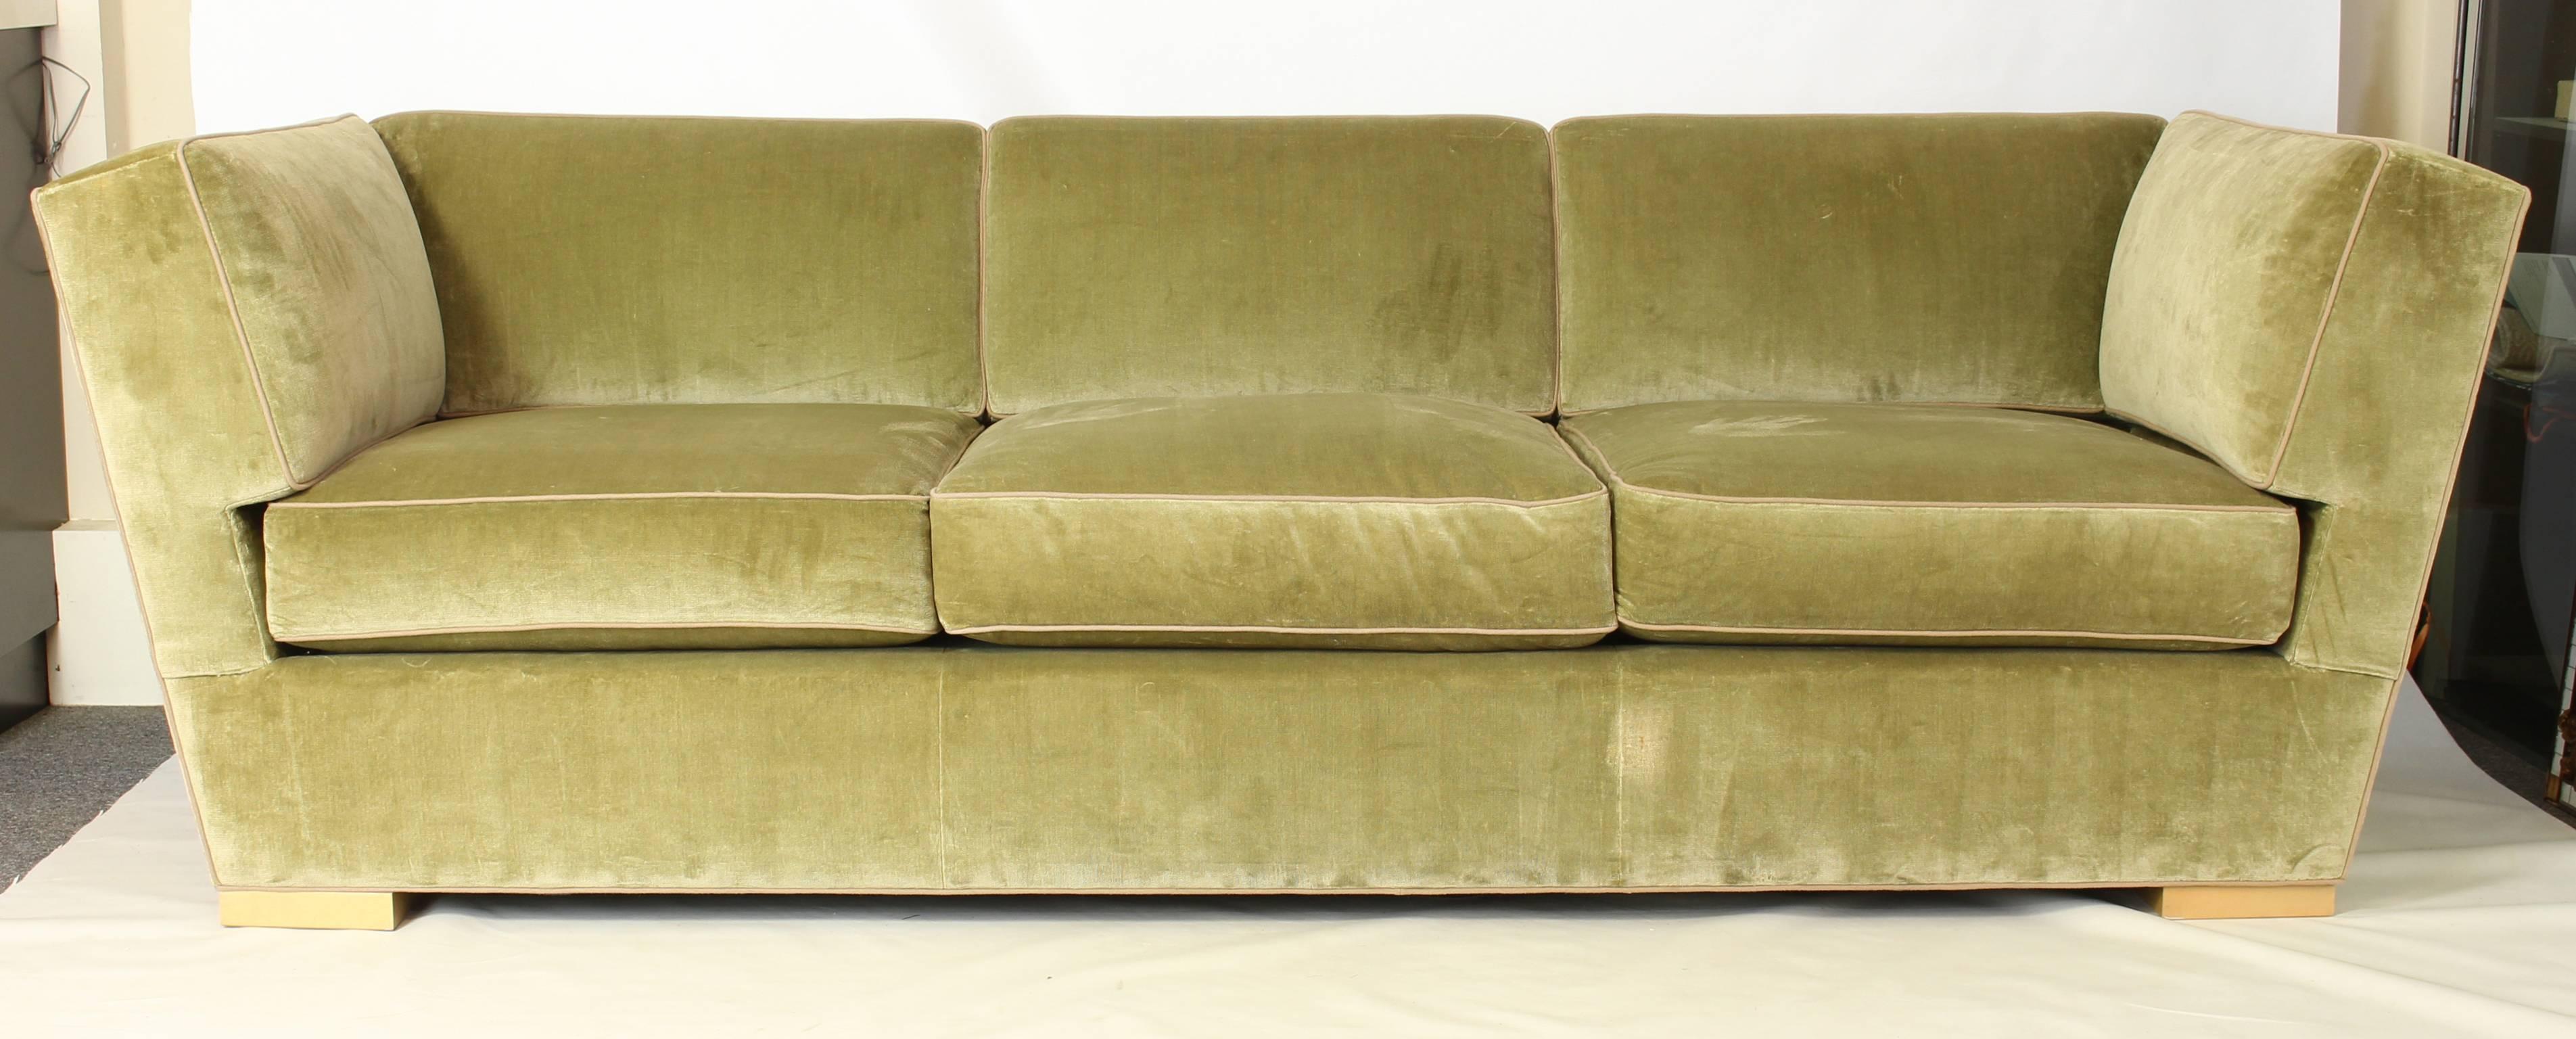 An elegant Art Deco inspired sage green velvet sofa manufactured by Donghia.